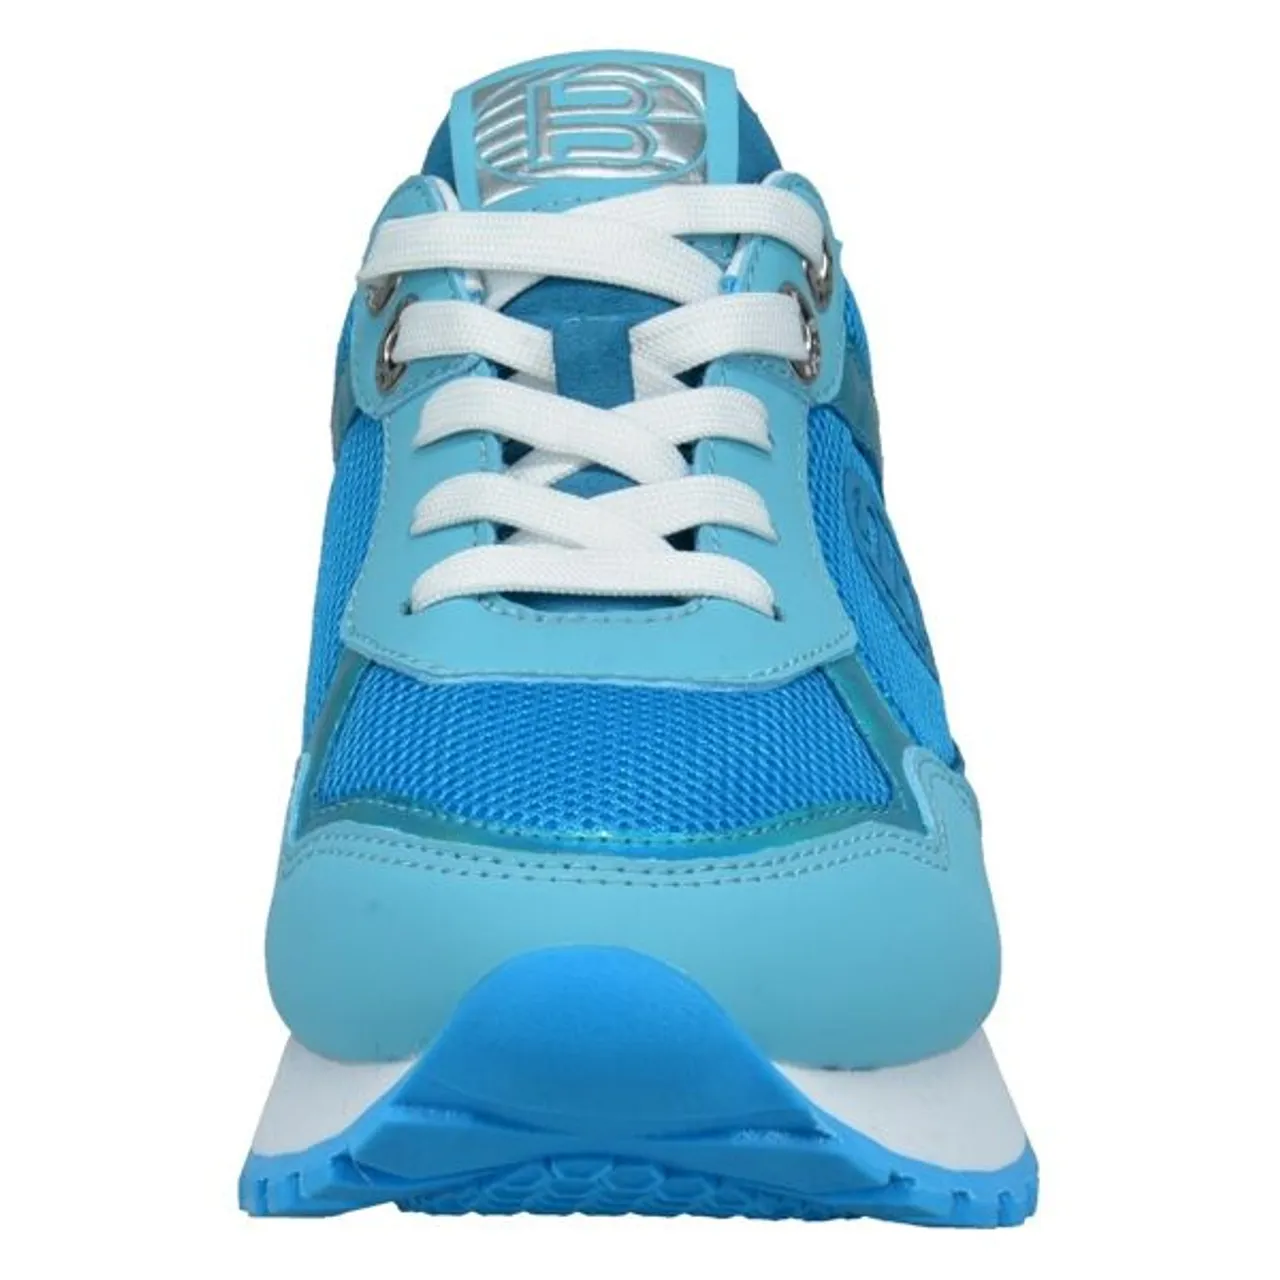 Plateausneaker BAGATT Gr. 41, blau (blau, hellblau) Damen Schuhe Sneaker modische Metallic-Einsätzen, Freizeitschuh, Halbschuh, Schnürschuh